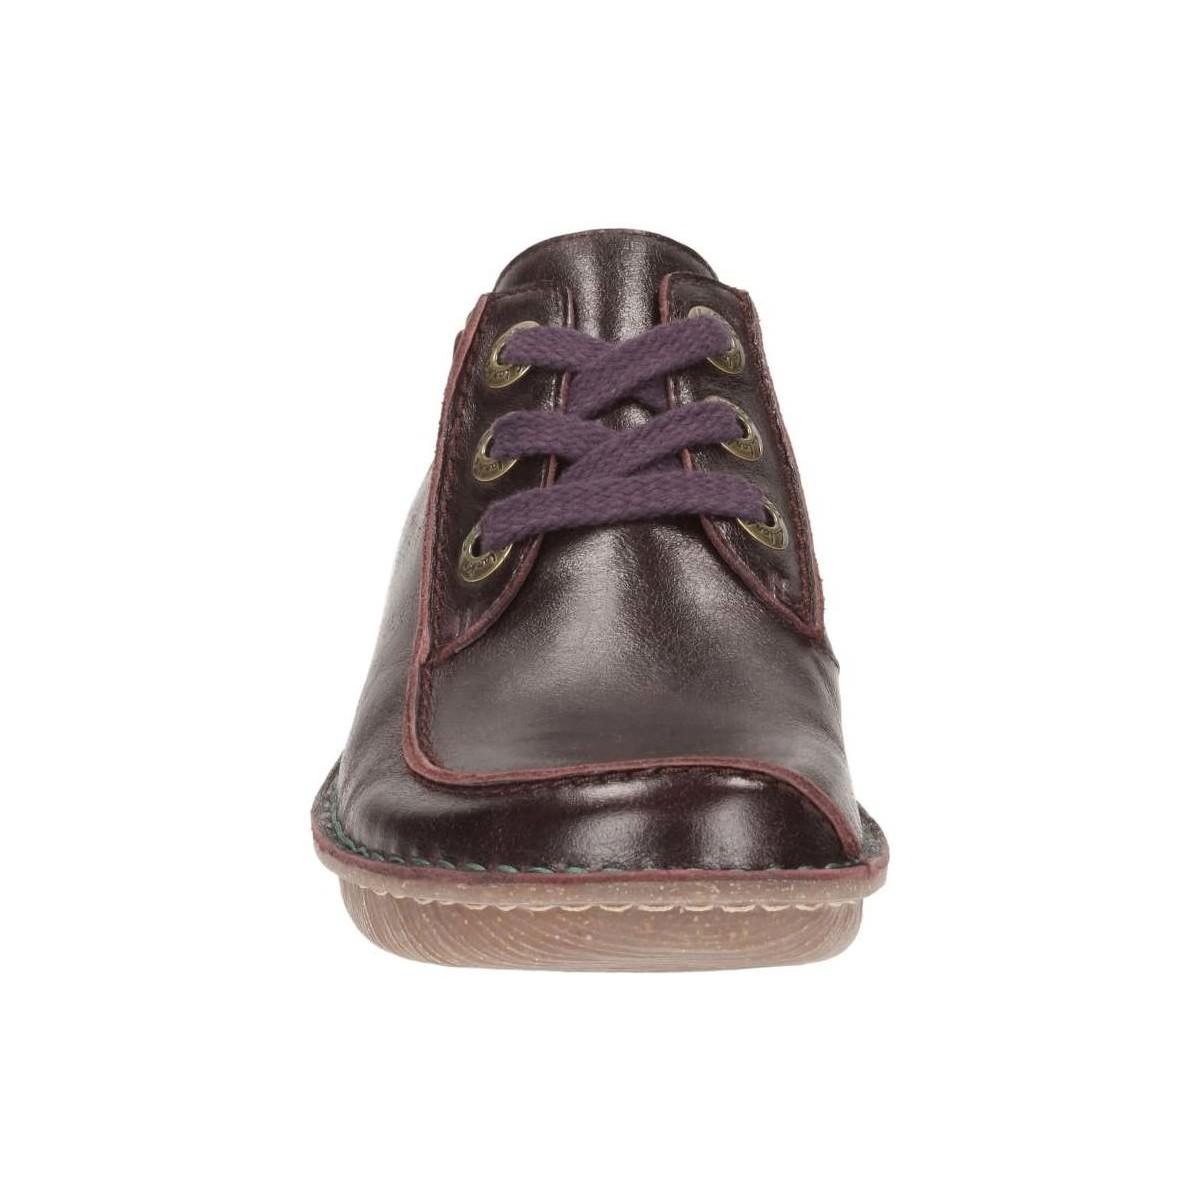 clarks funny dream shoes purple